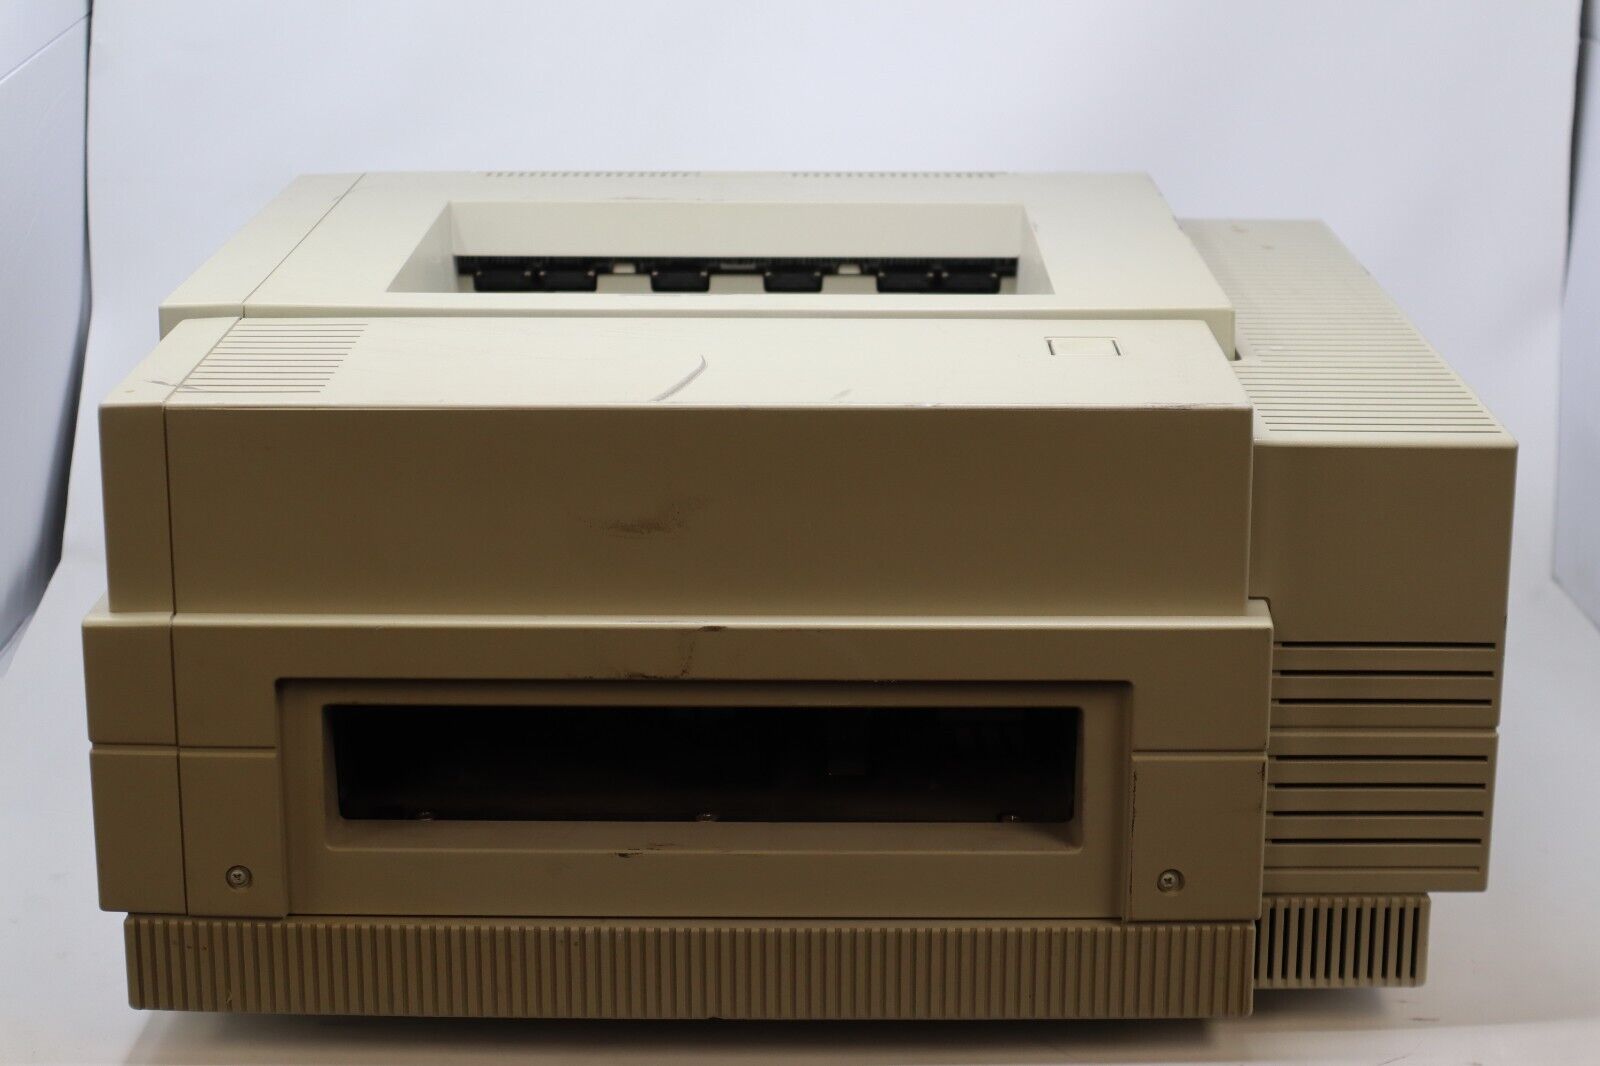 Apple LaserWriter II Printer | Vintage Printer | Beige | Powered on but untested